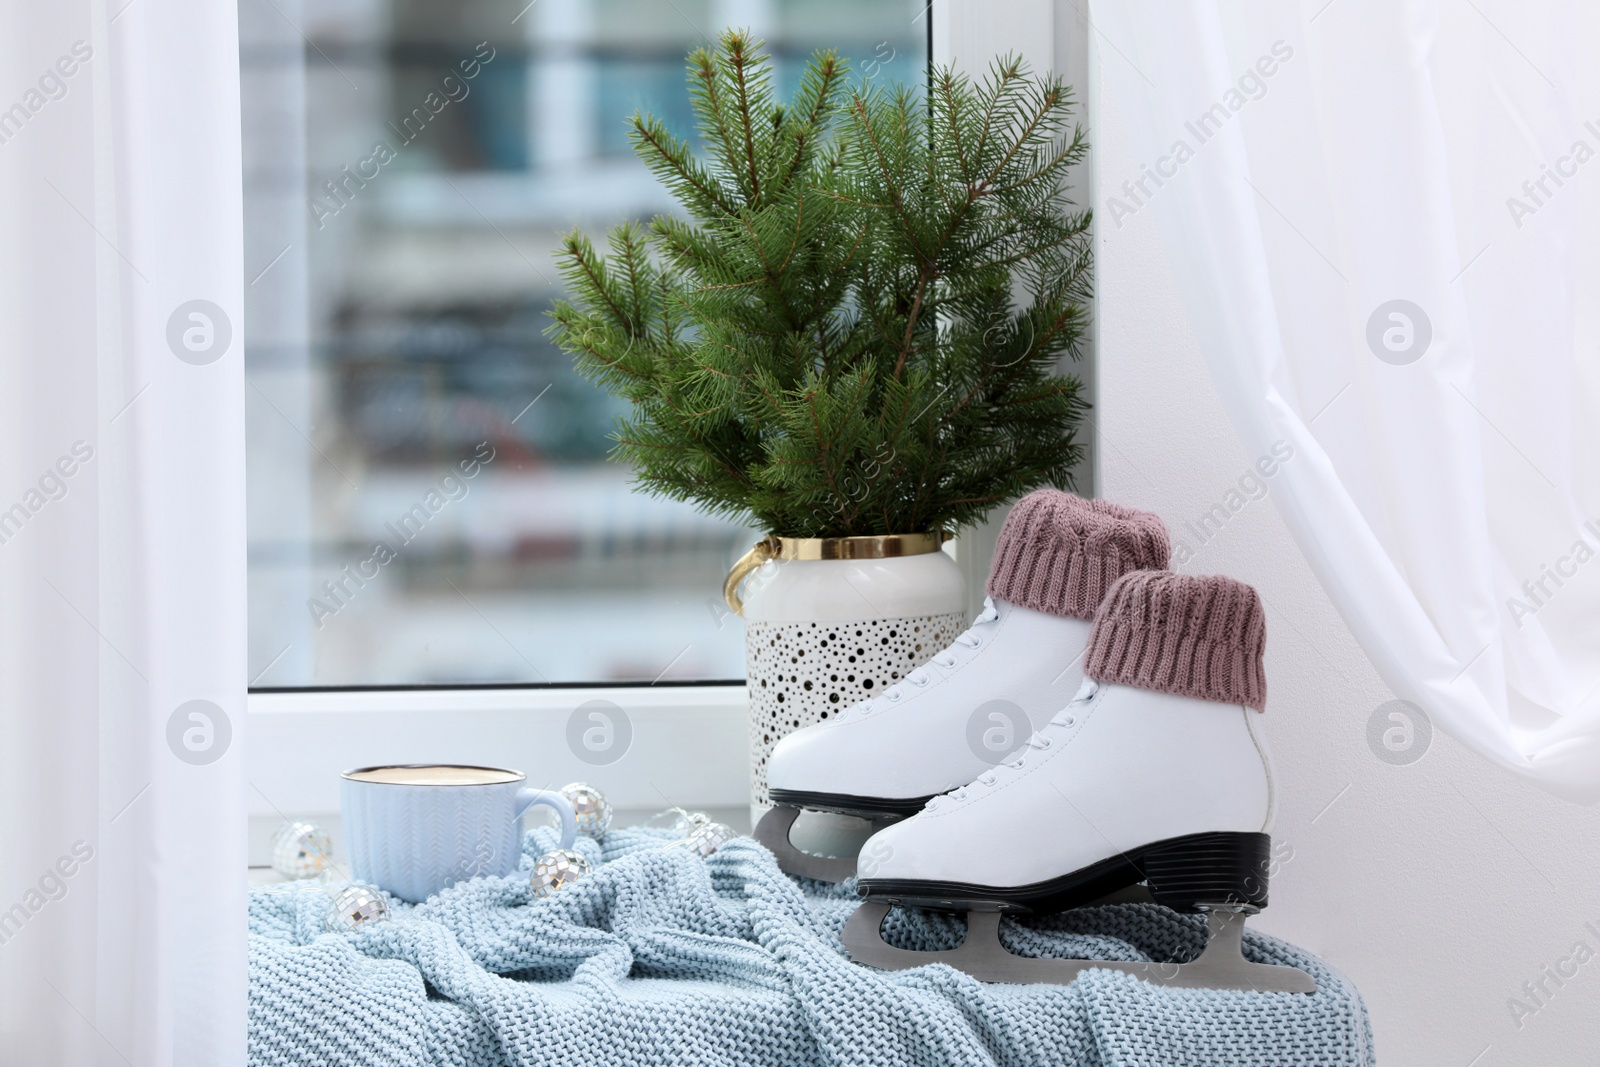 Photo of Pair of ice skates and Christmas decor near window indoors